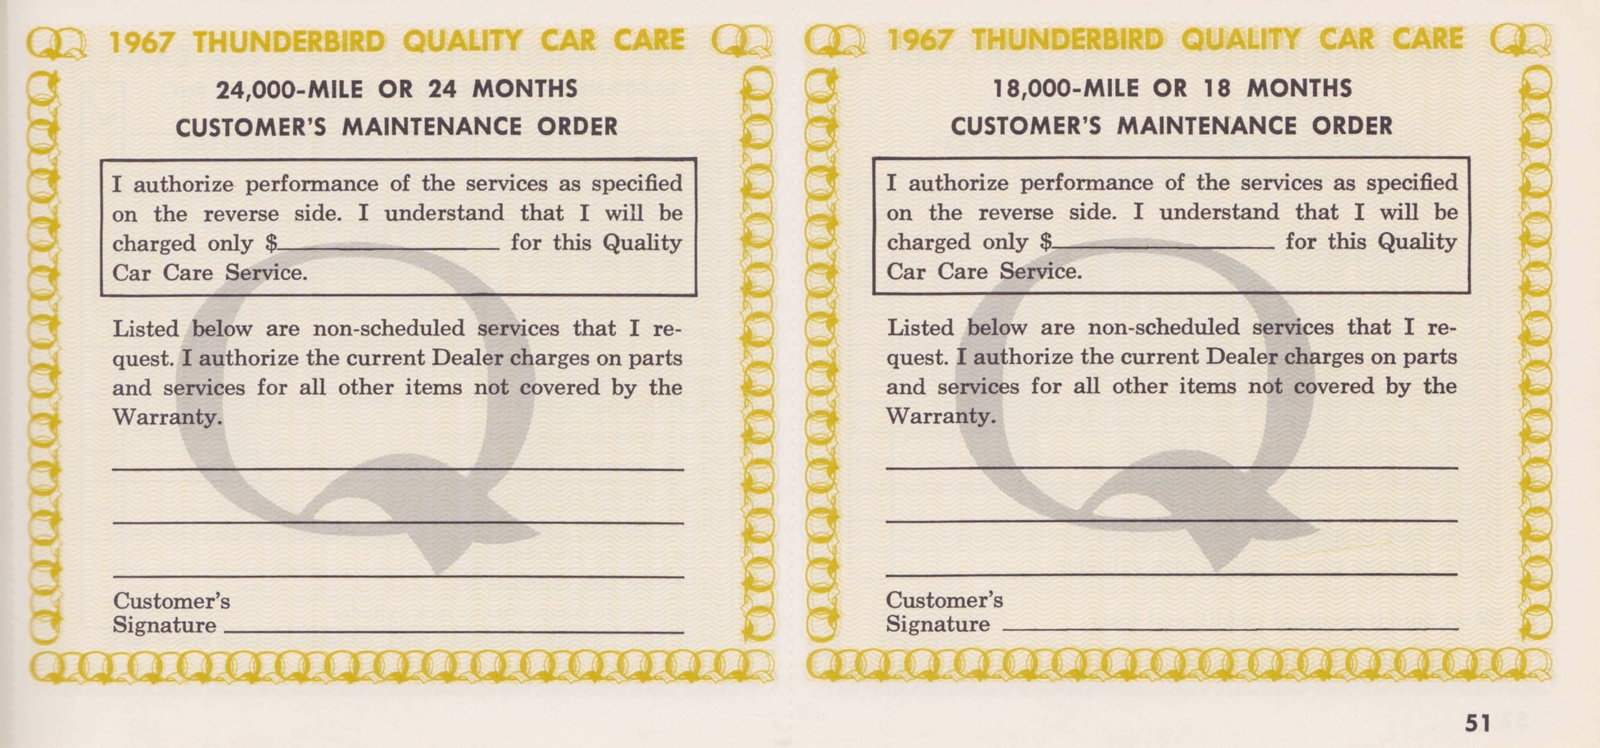 n_1967 Thunderbird Owner's Manual-51.jpg